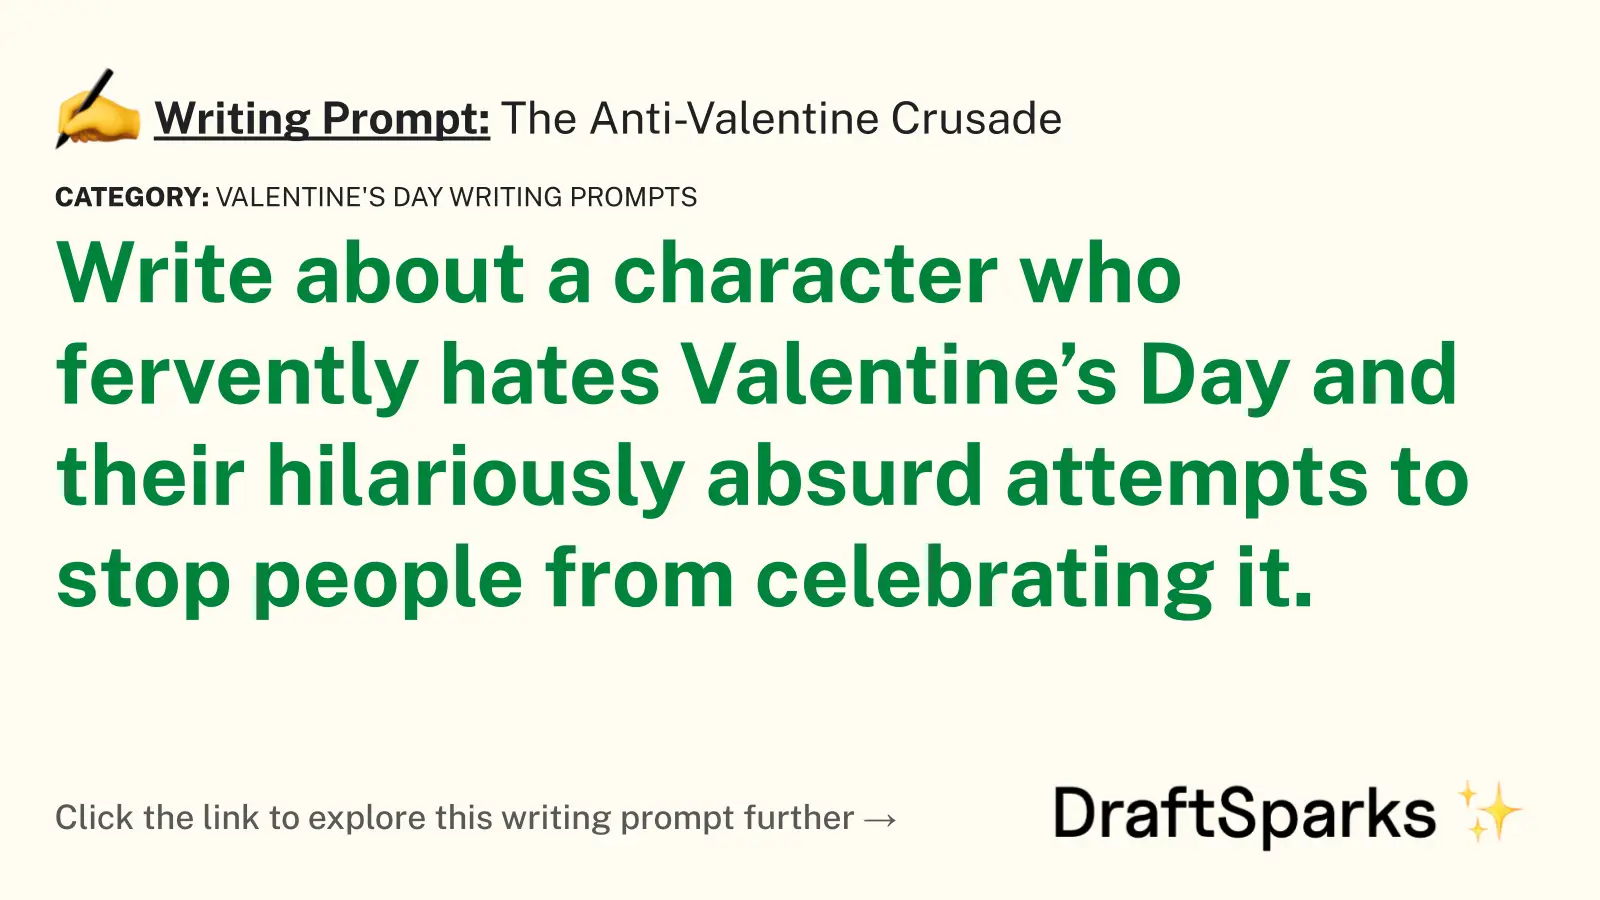 The Anti-Valentine Crusade